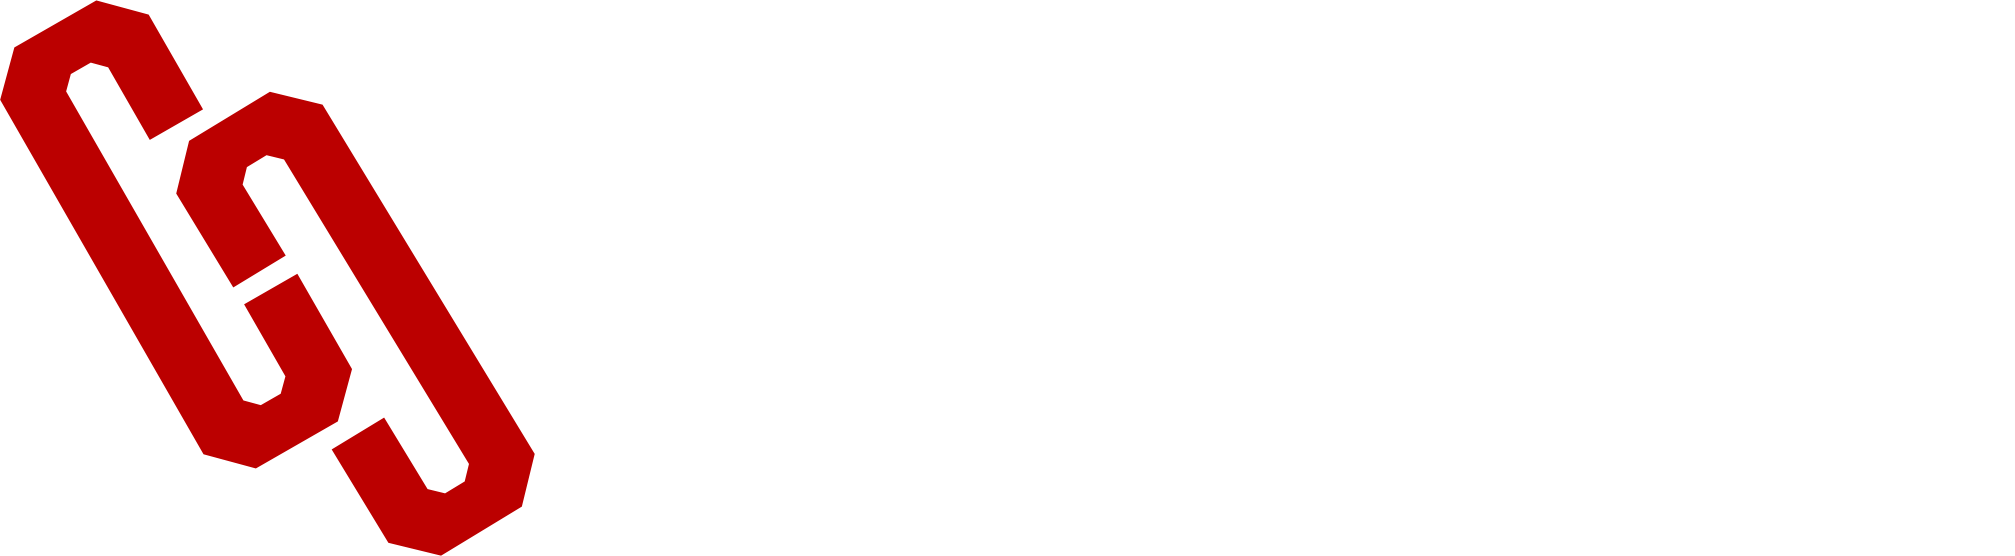 Cecktor Limited Logo